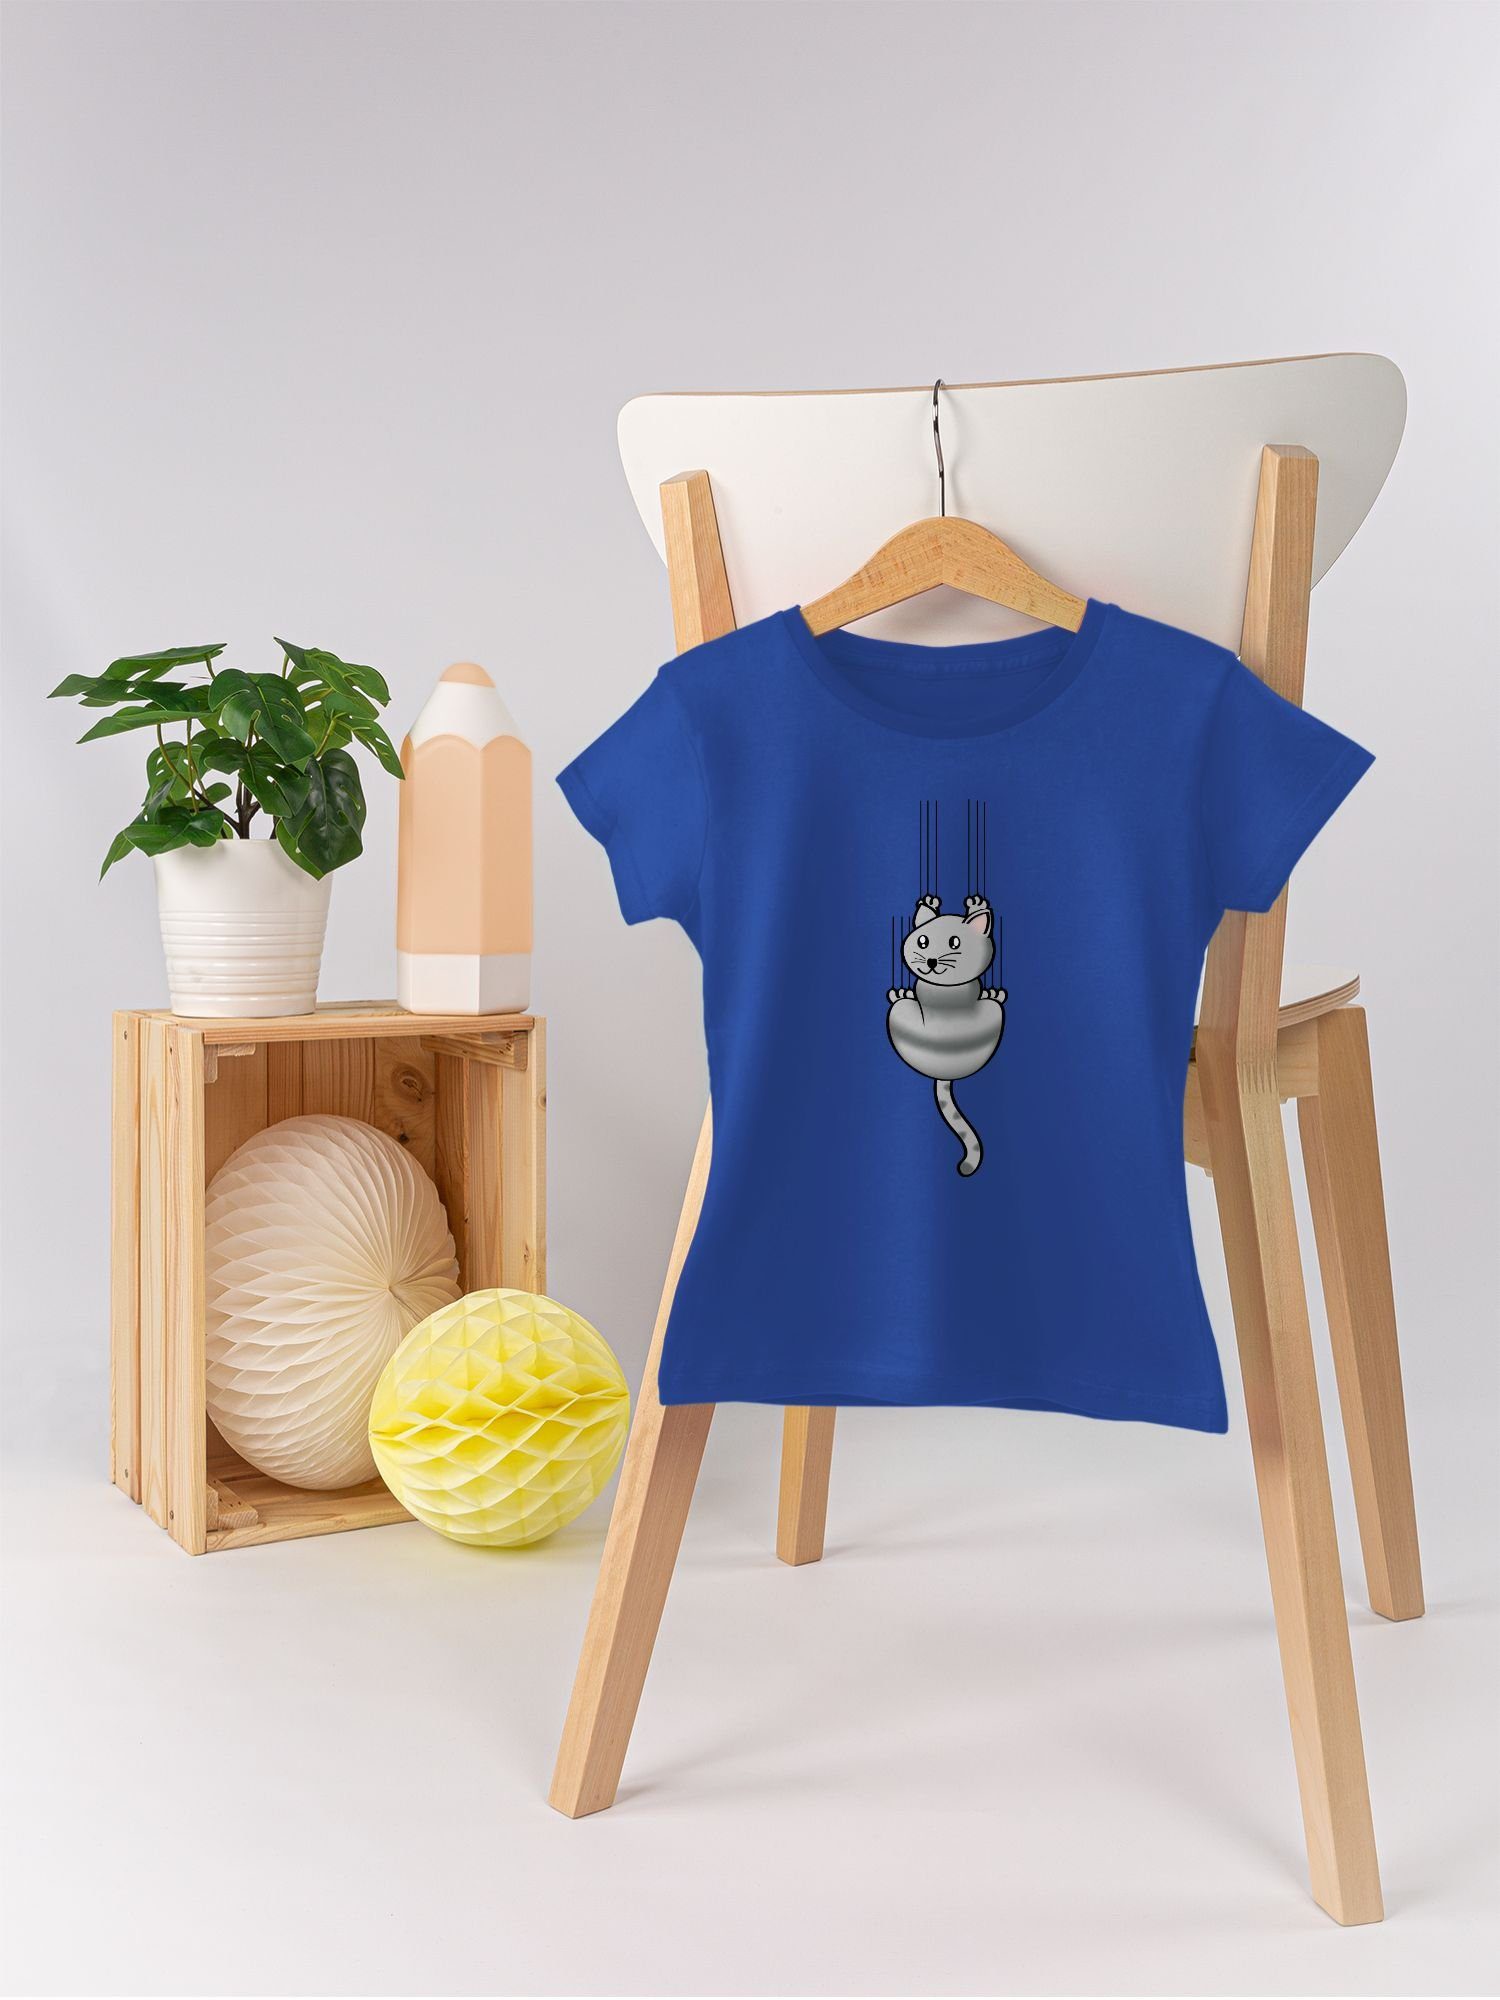 Shirtracer Tiermotiv Animal T-Shirt 2 Katze Print Royalblau Kratze